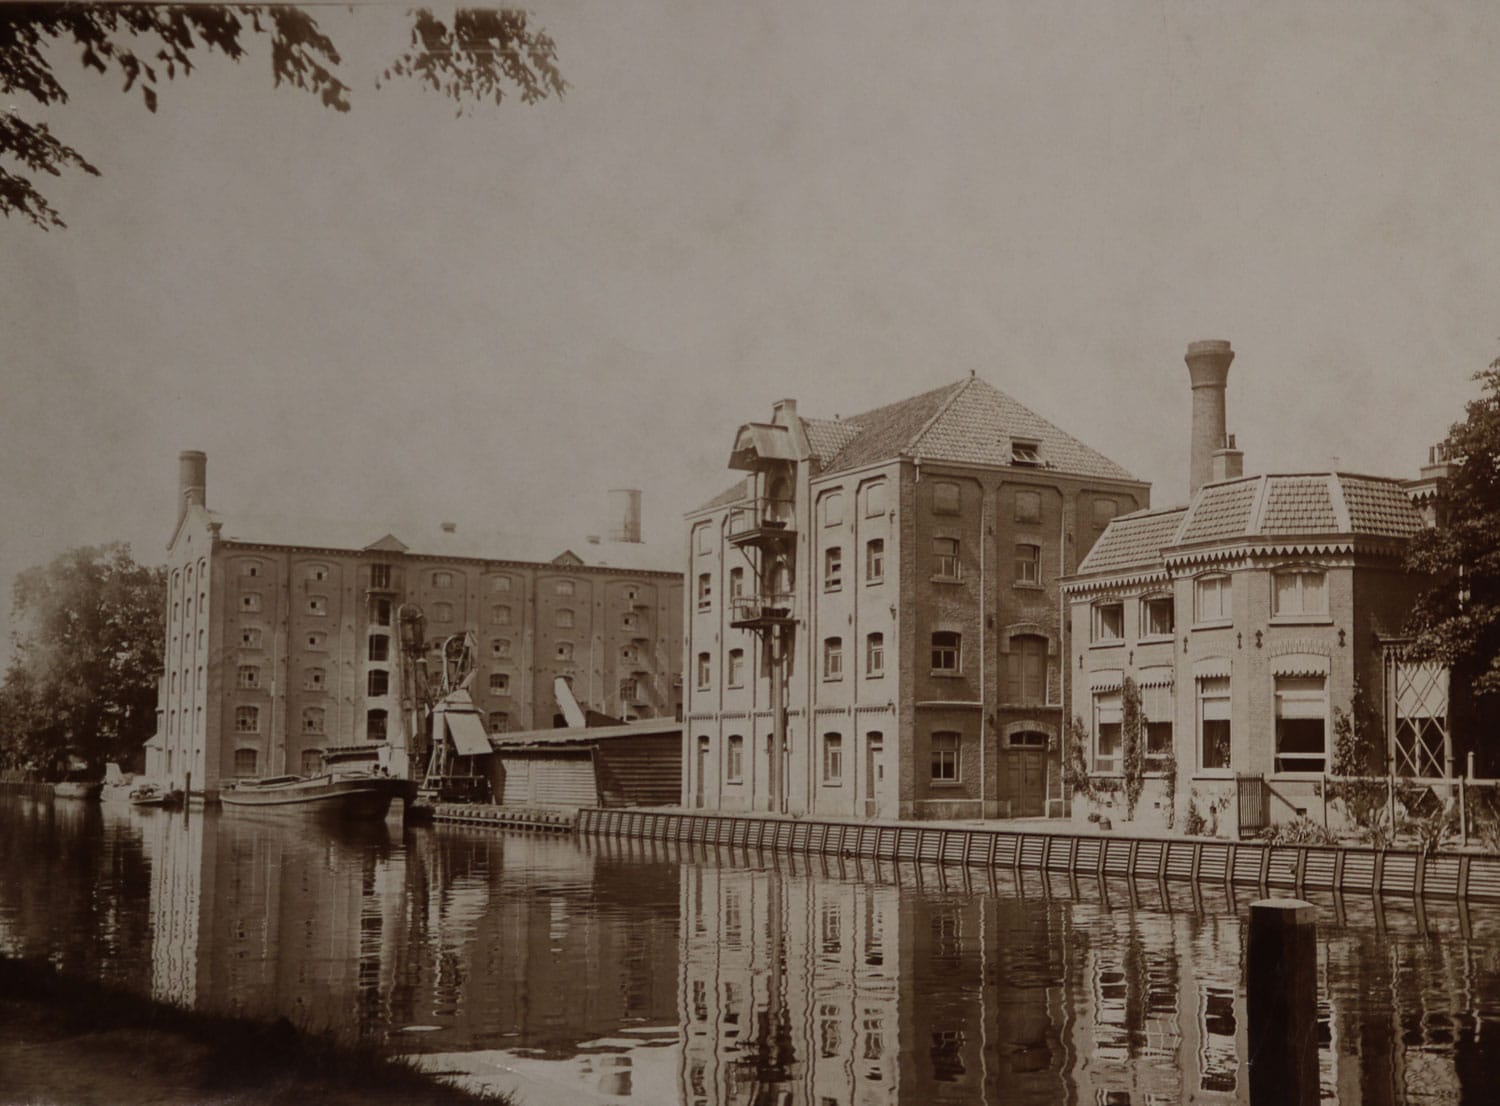 Koechlin, meelfabriek, Trekvliet, ca. 1860